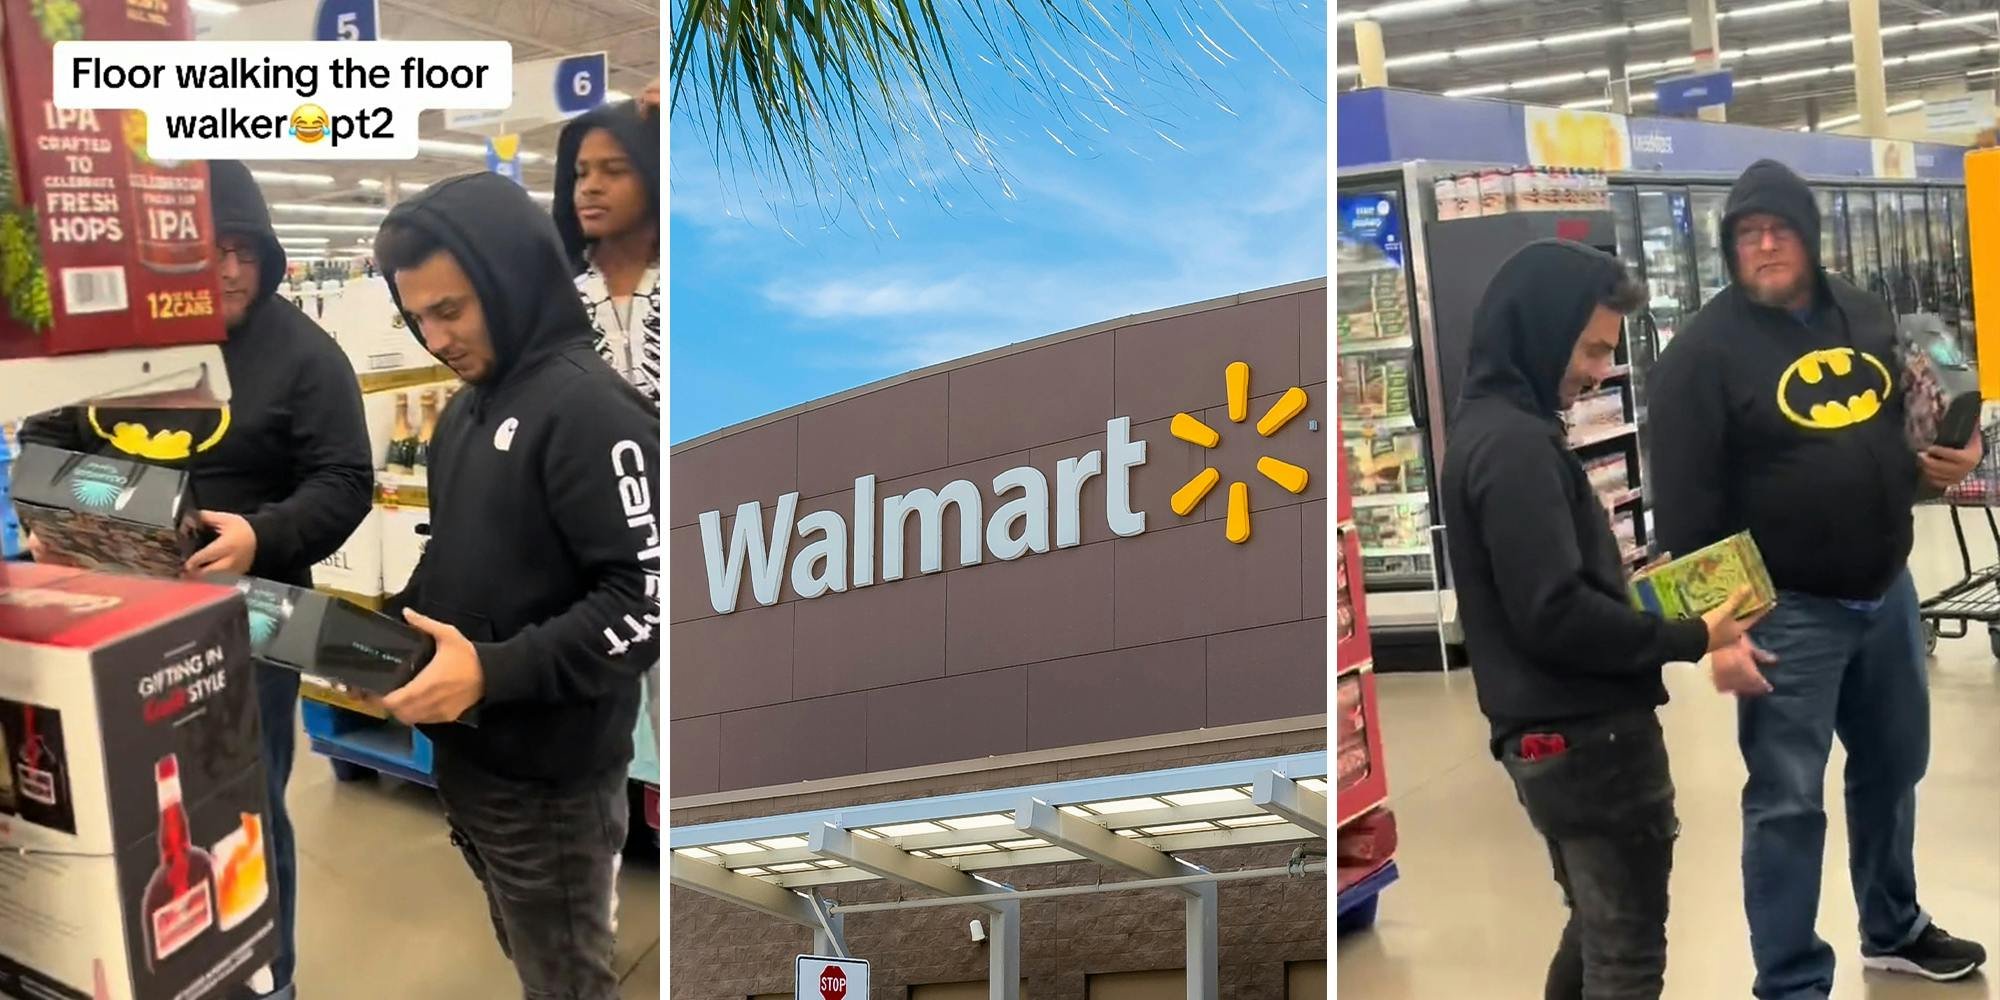 Walmart customers spot a ‘floor walker’ following them. They get revenge